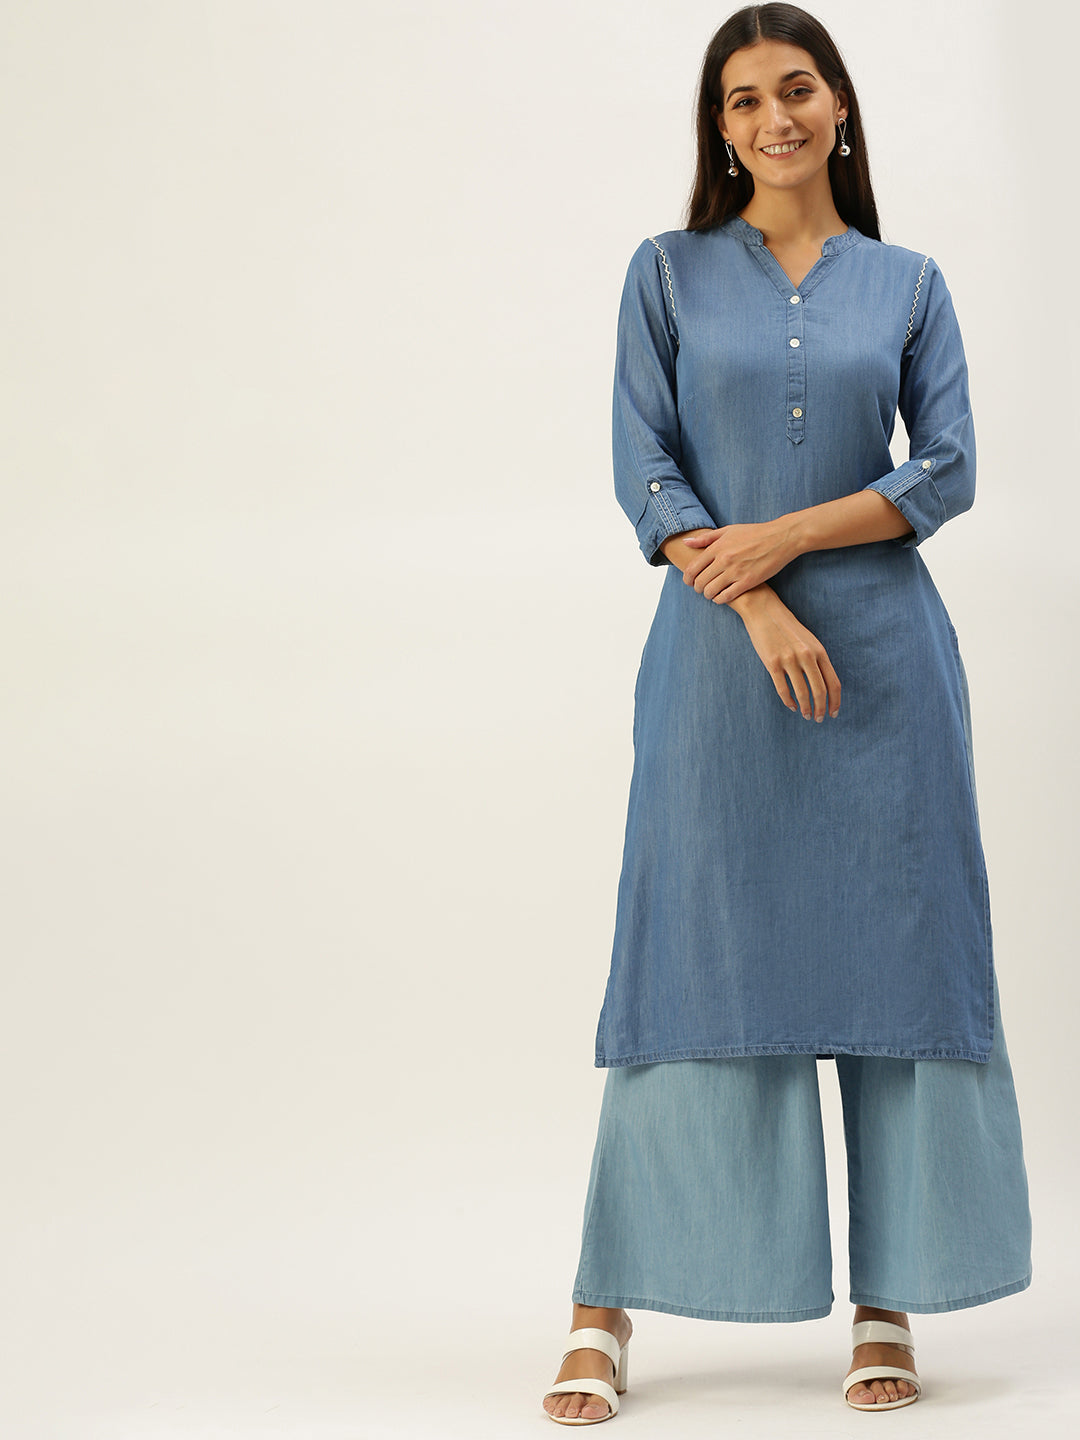 Buy Online Blue Cotton Jacket for Women  Girls at Best Prices in Biba  IndiaVINTAGE16847SS21BLU